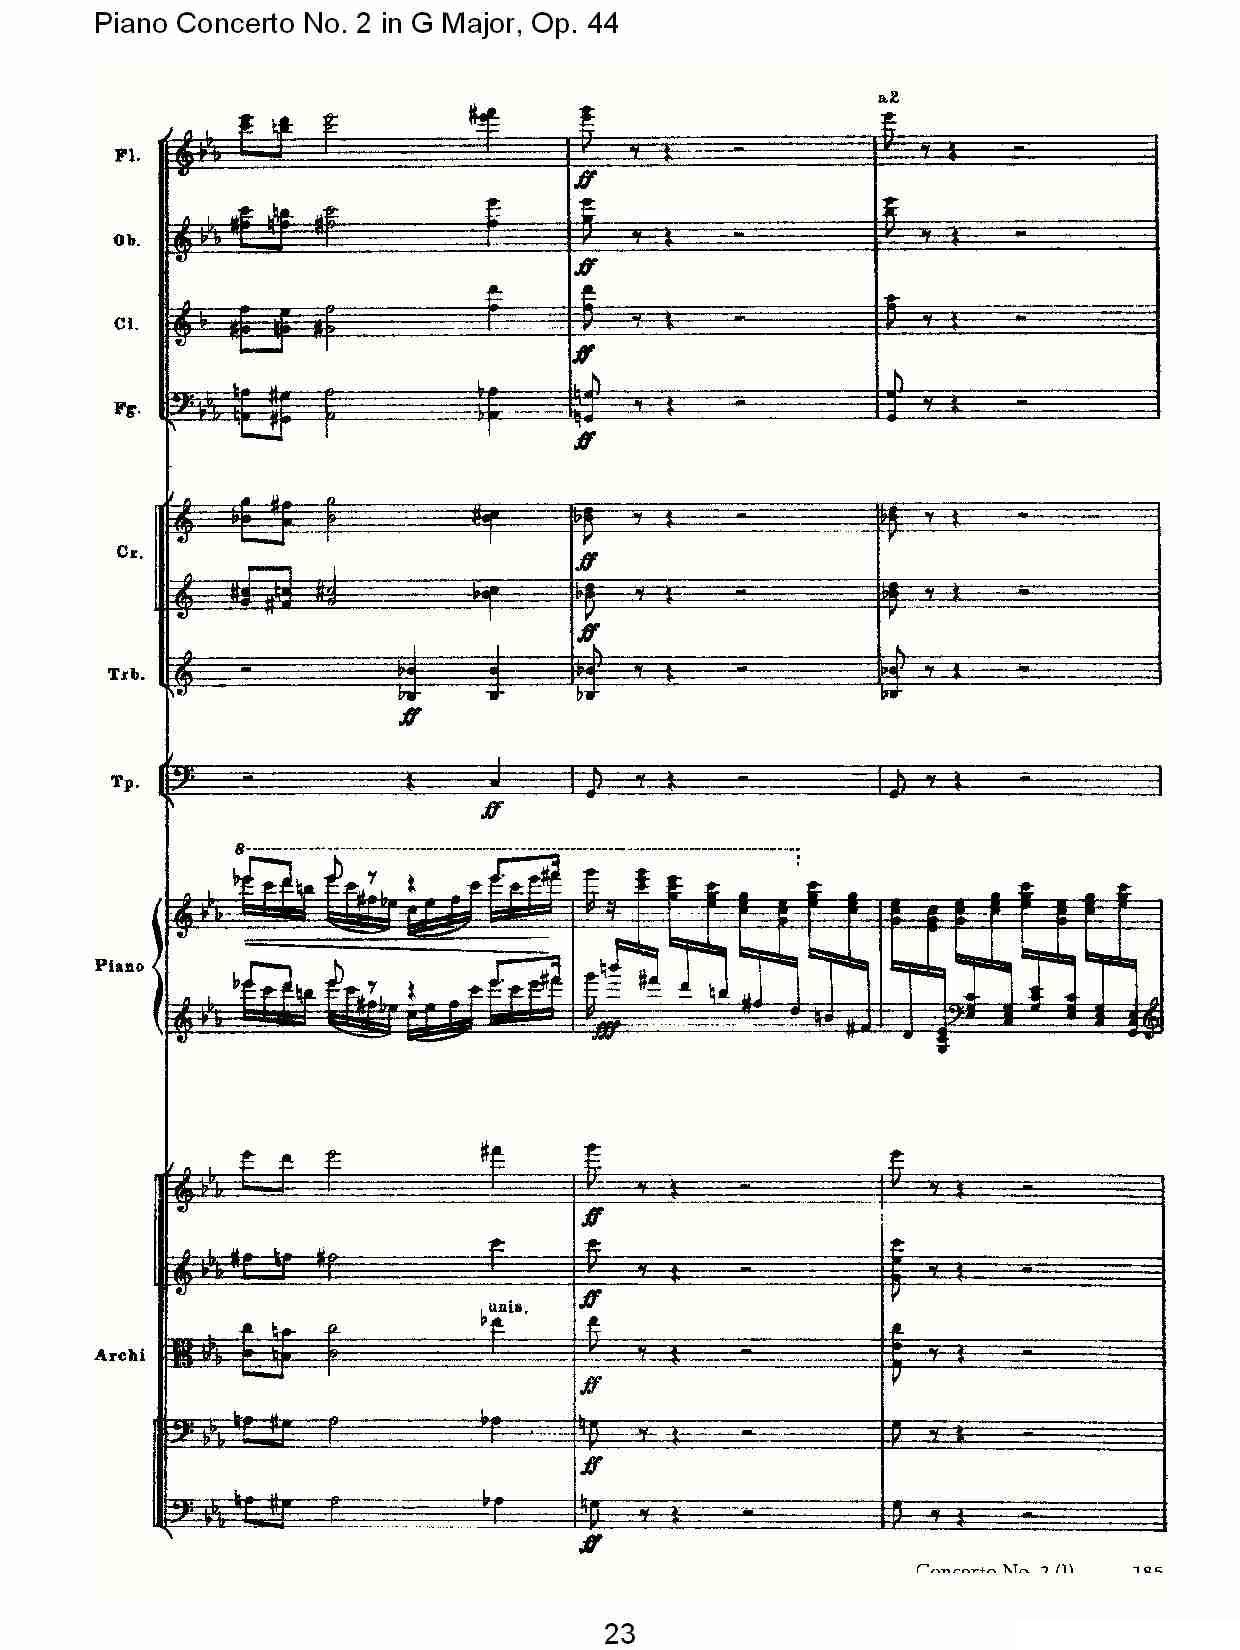 G大调第二钢琴协奏曲, Op.44第一乐章（一）钢琴曲谱（图23）